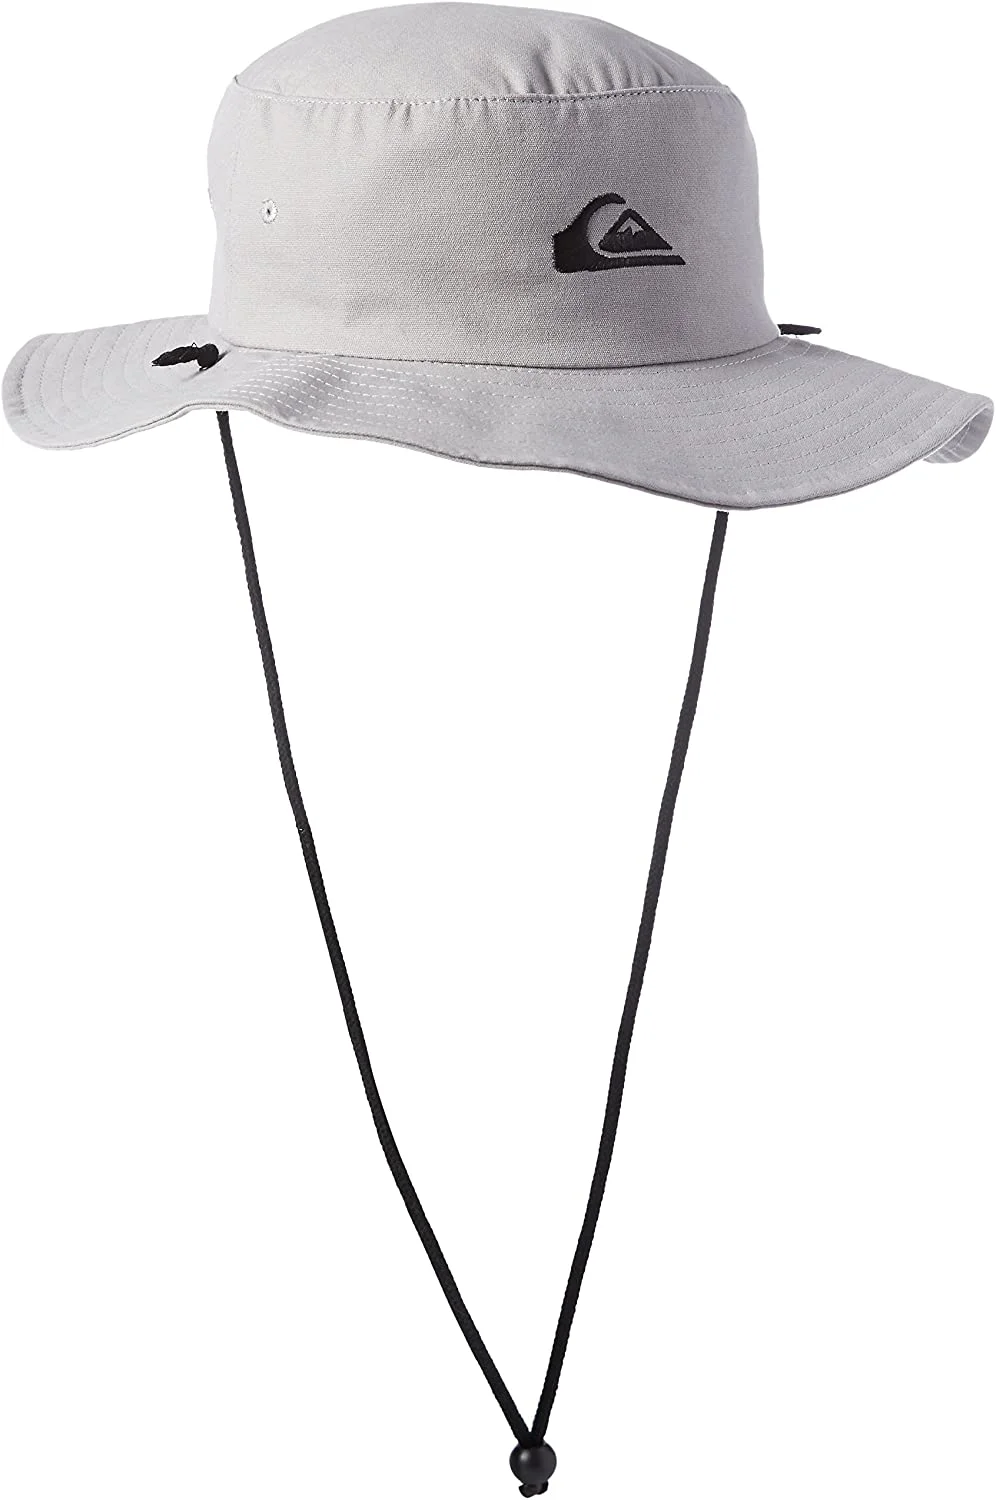 Men's Bushmaster Sun Protection Floppy Bucket Hat